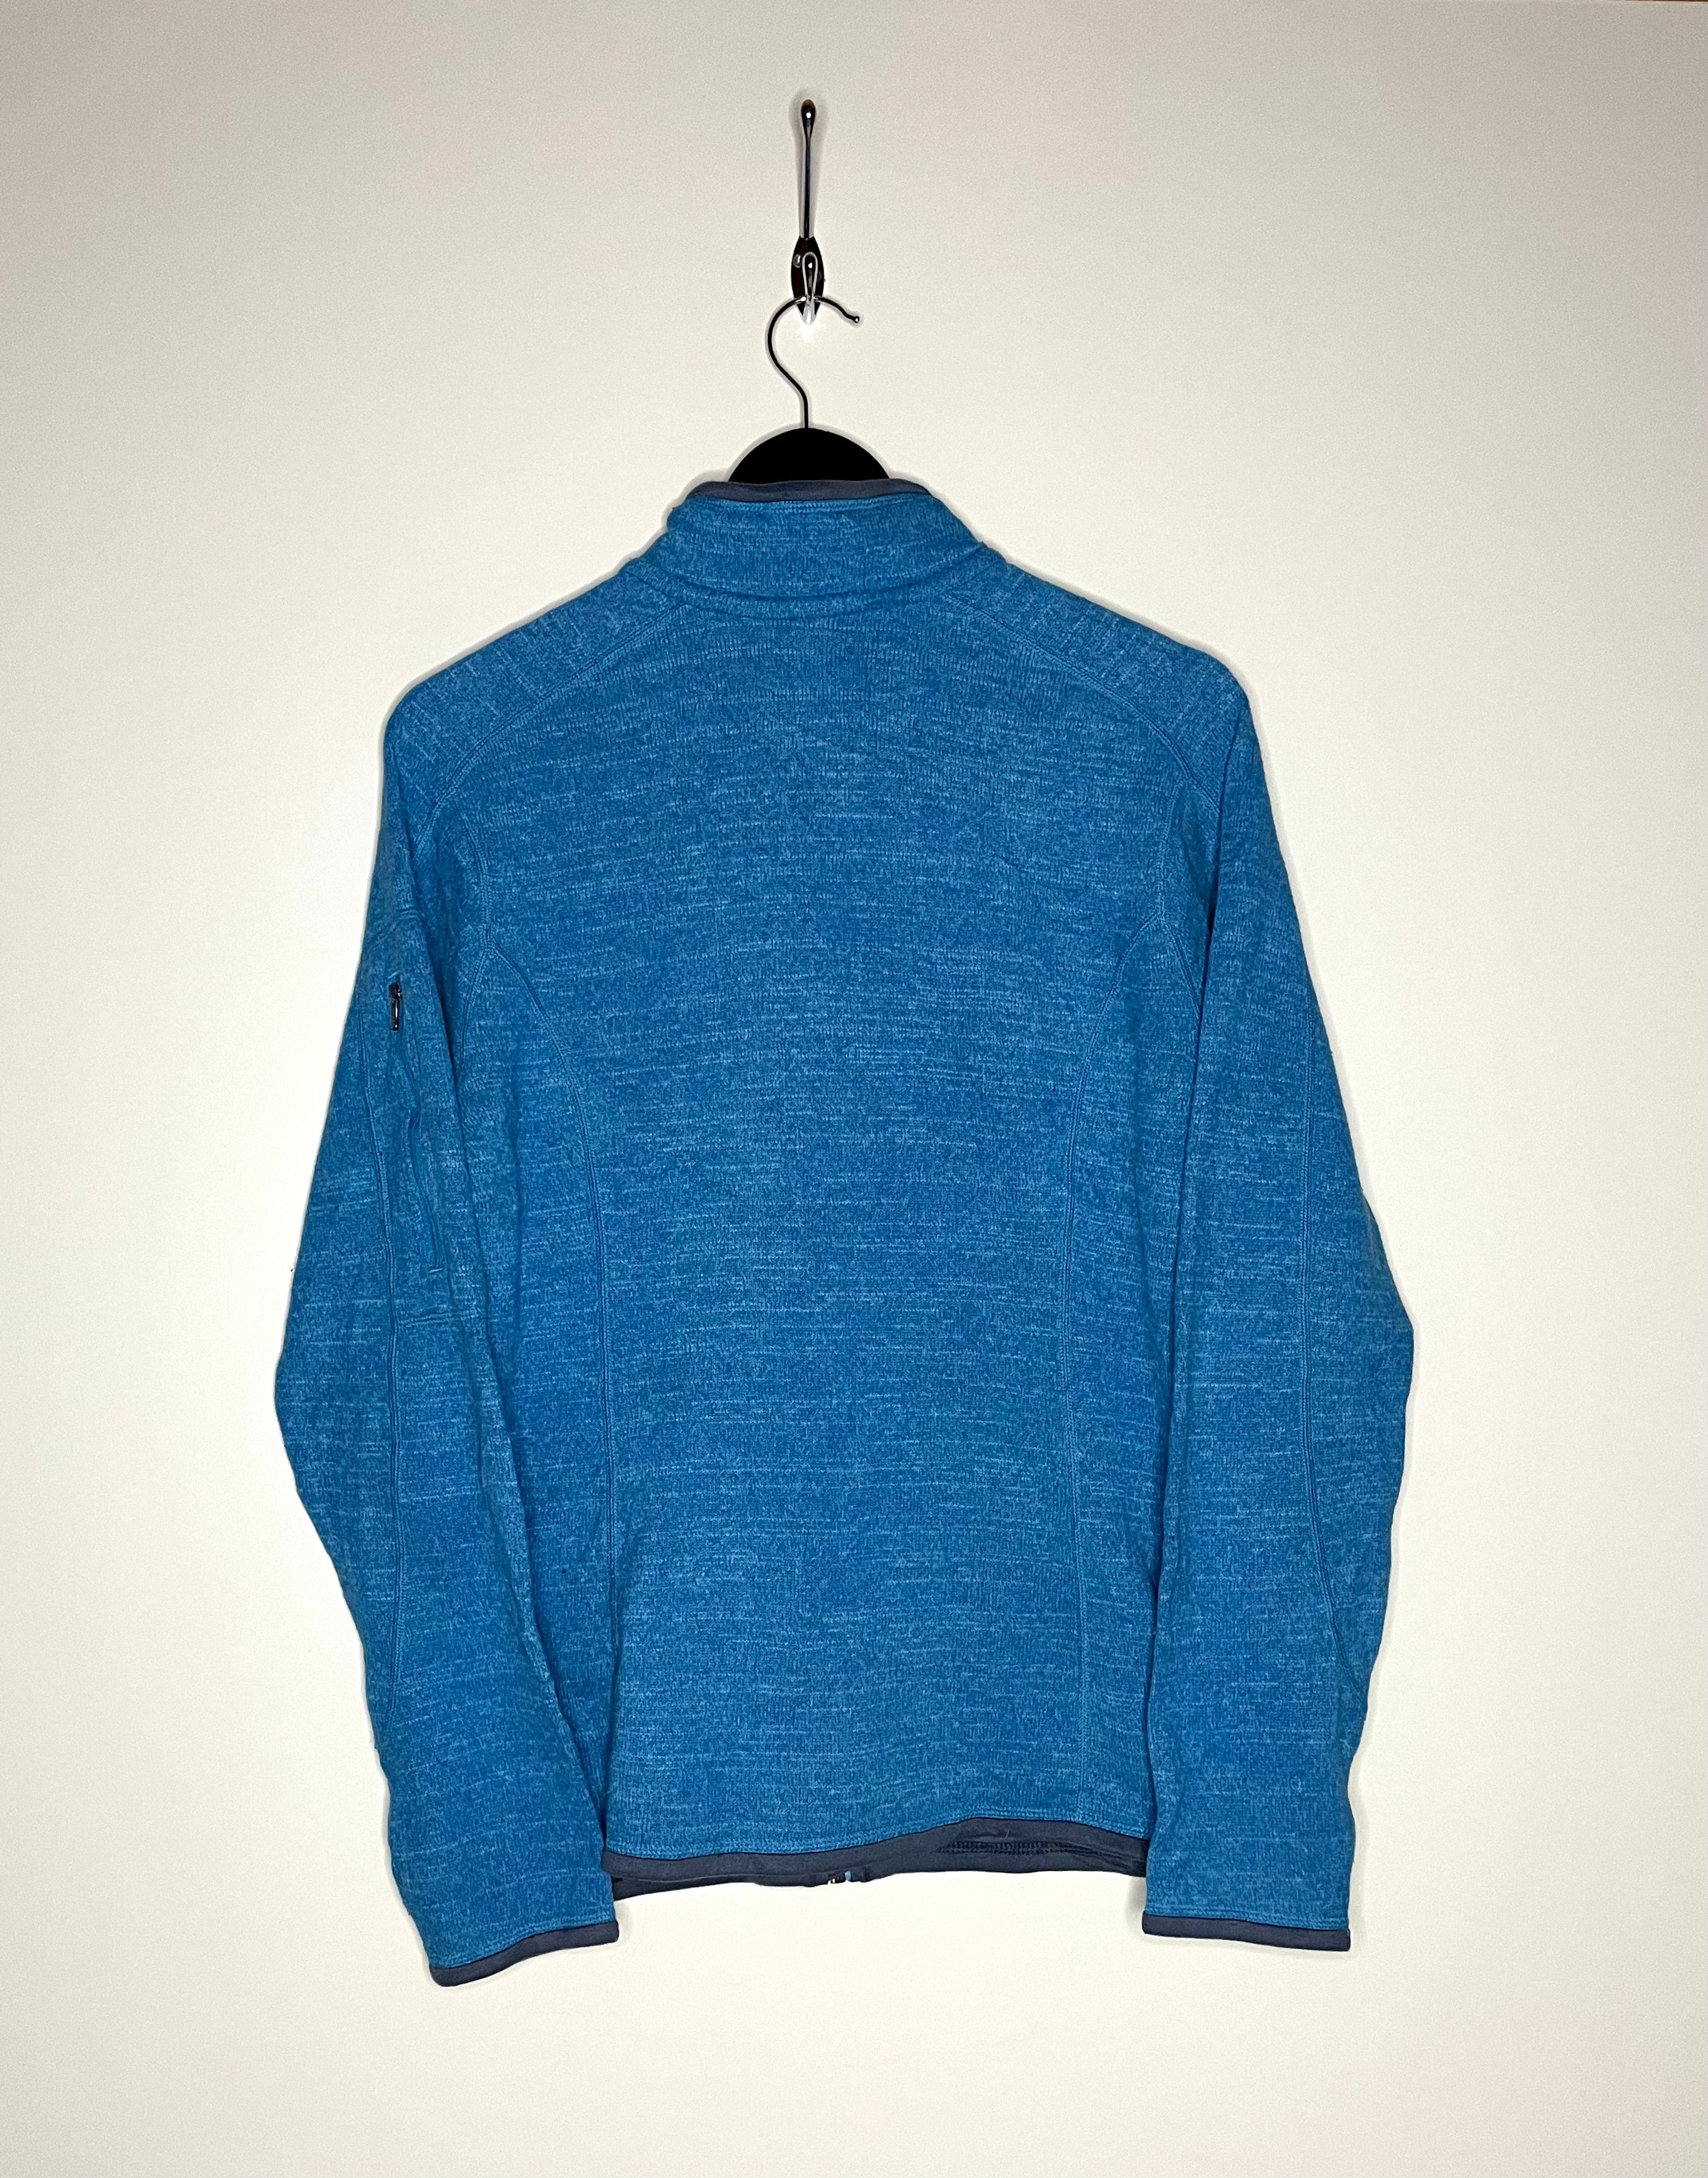 Patagonia Vintage Fleece Jacke Blau Größe M